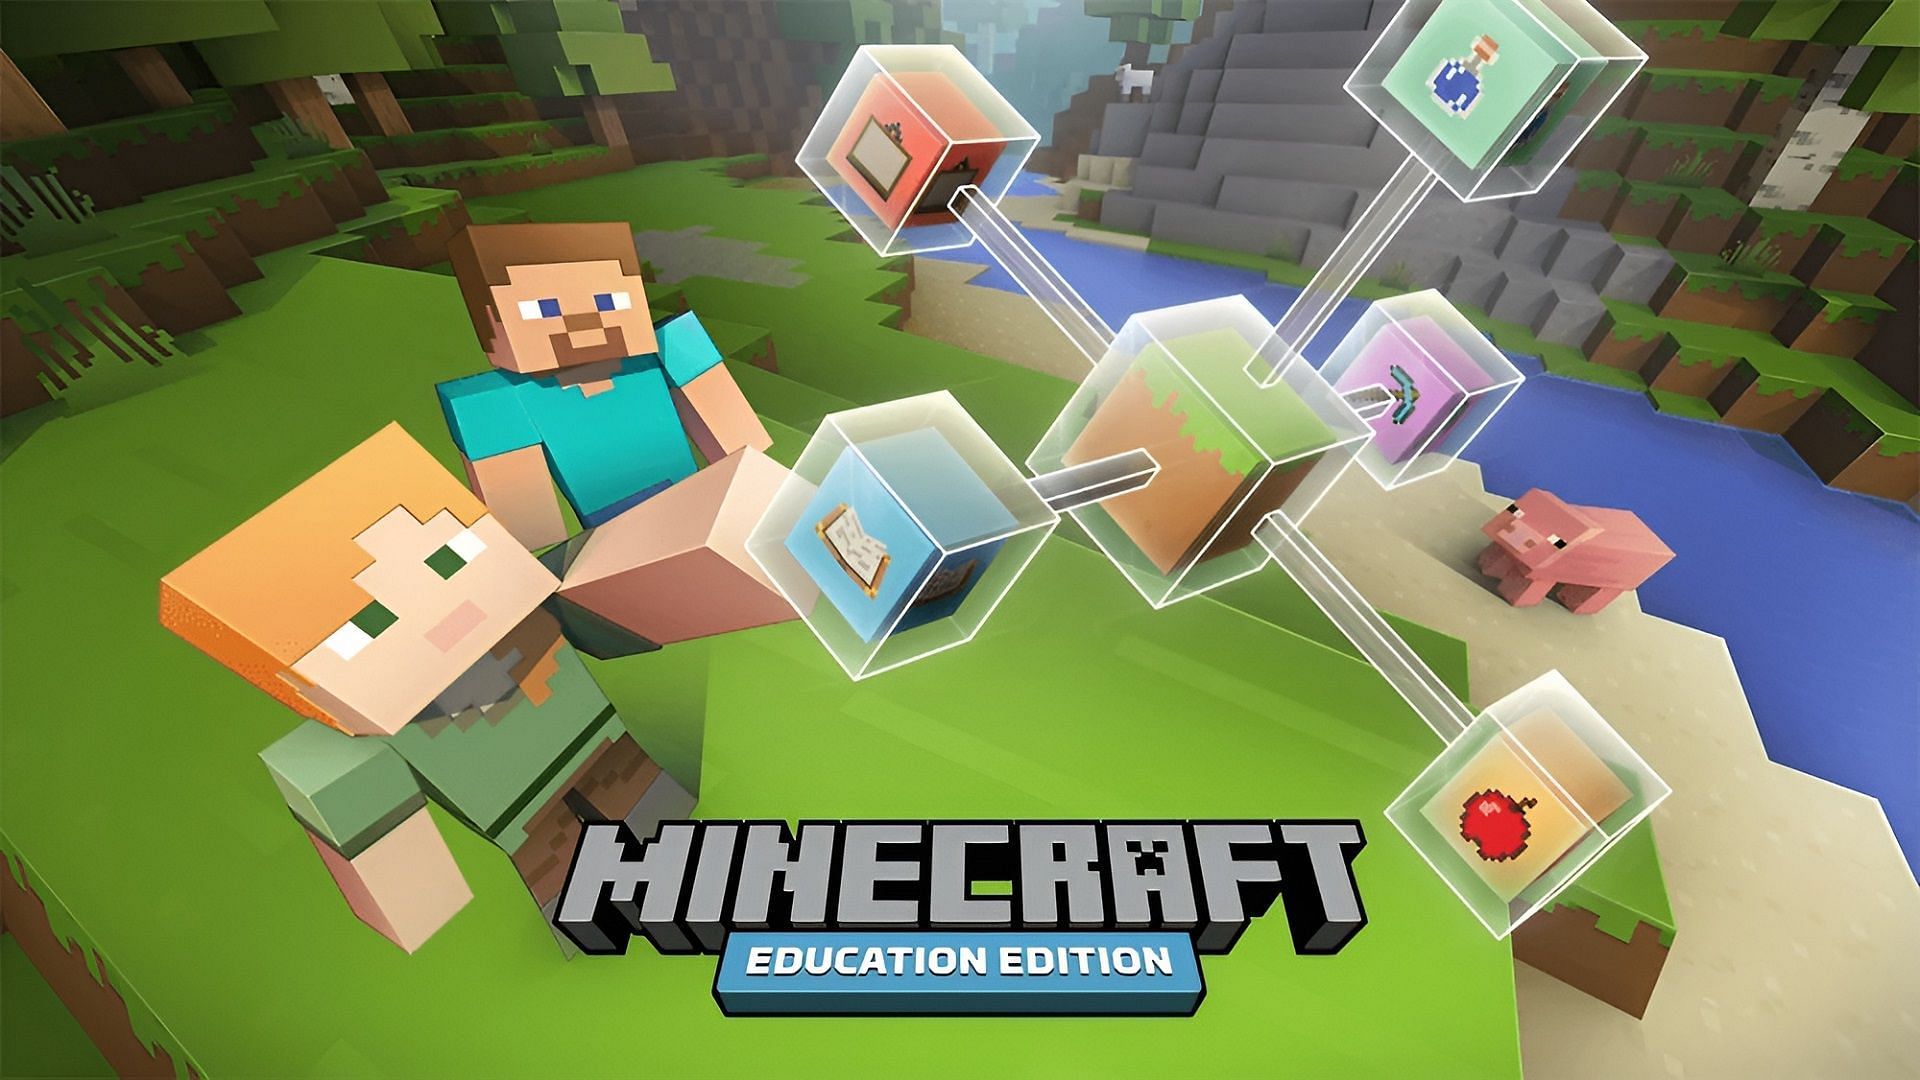 Key art for Minecraft: Education Edition (Image via Mojang)